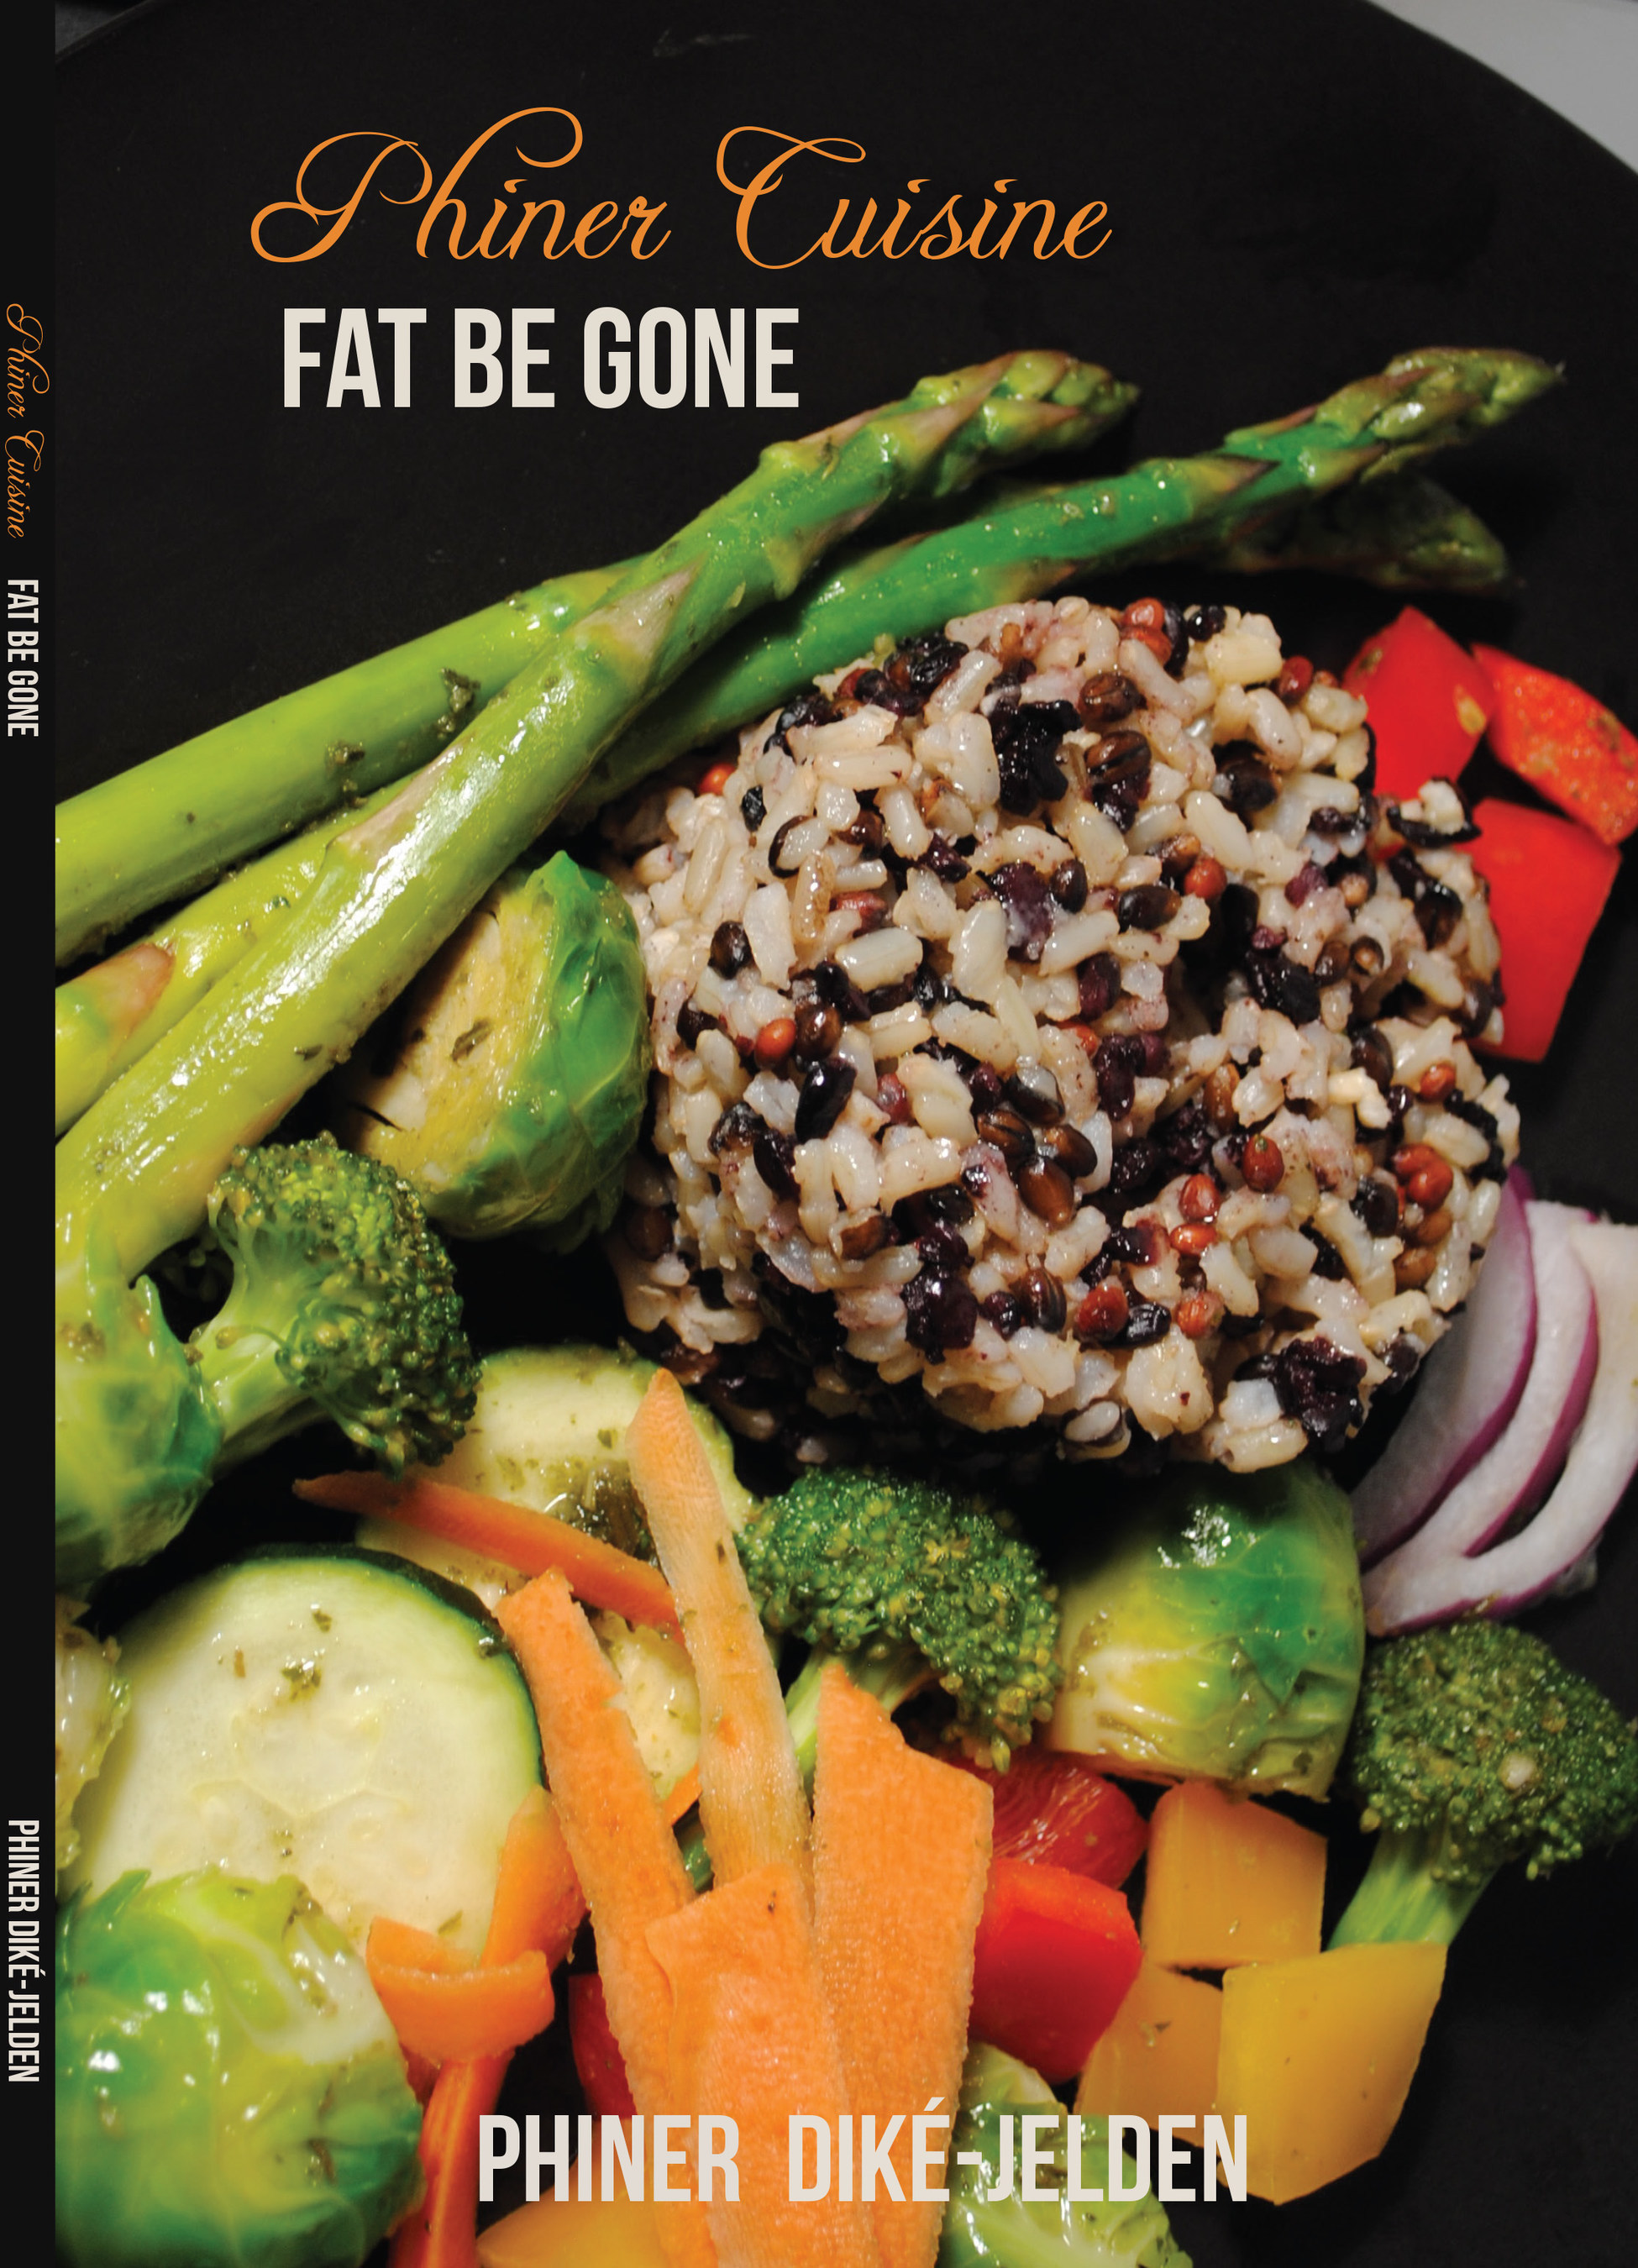 Phiner Cuisine: Fat Be Gone (PRNewsFoto/Phiner Cuisine)